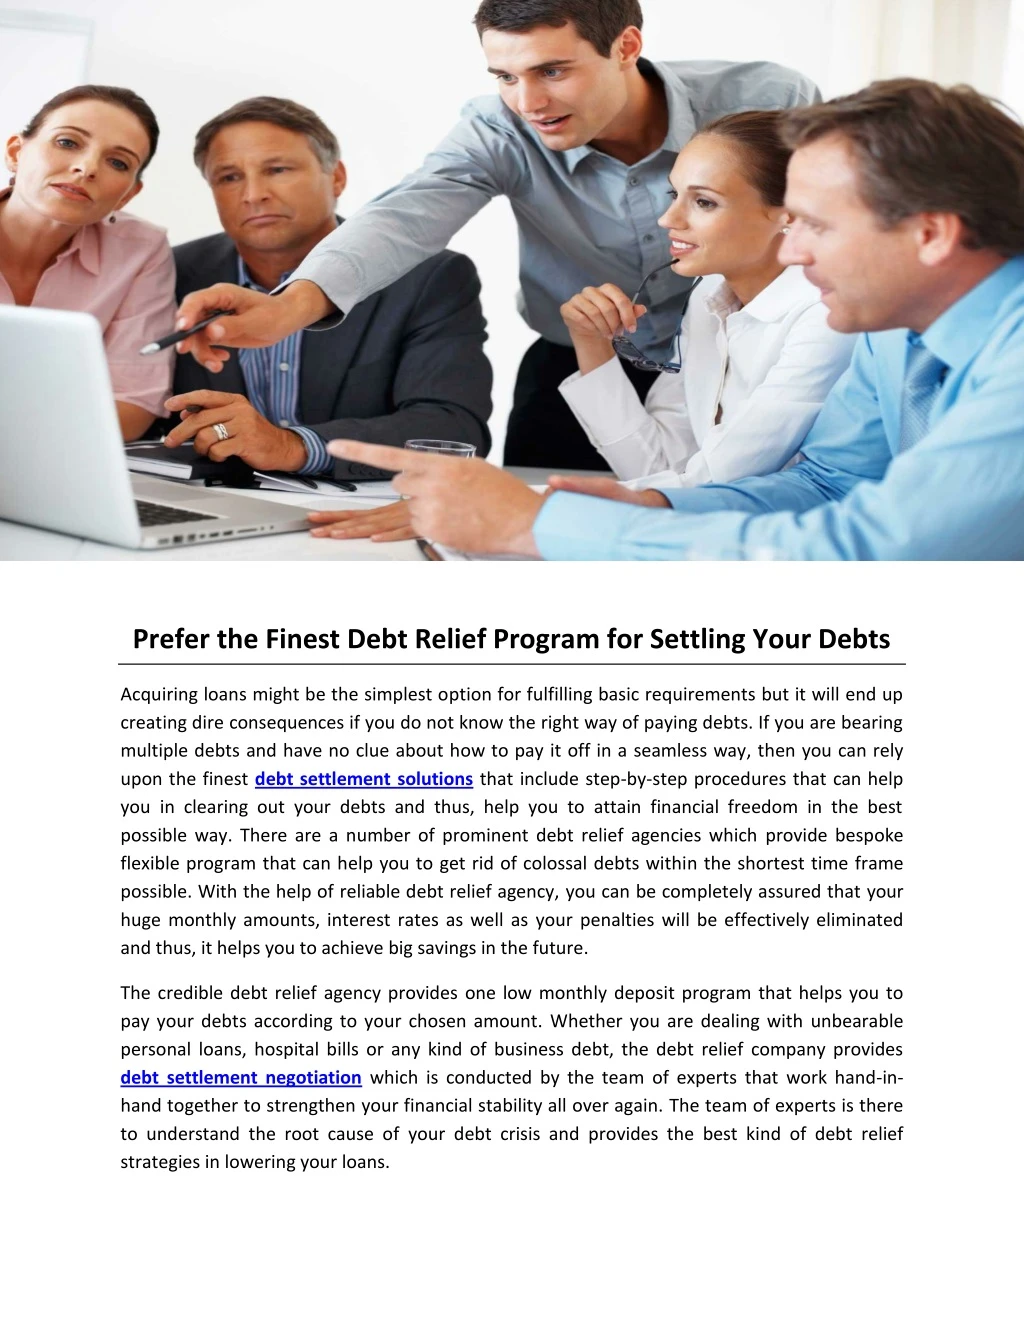 prefer the finest debt relief program